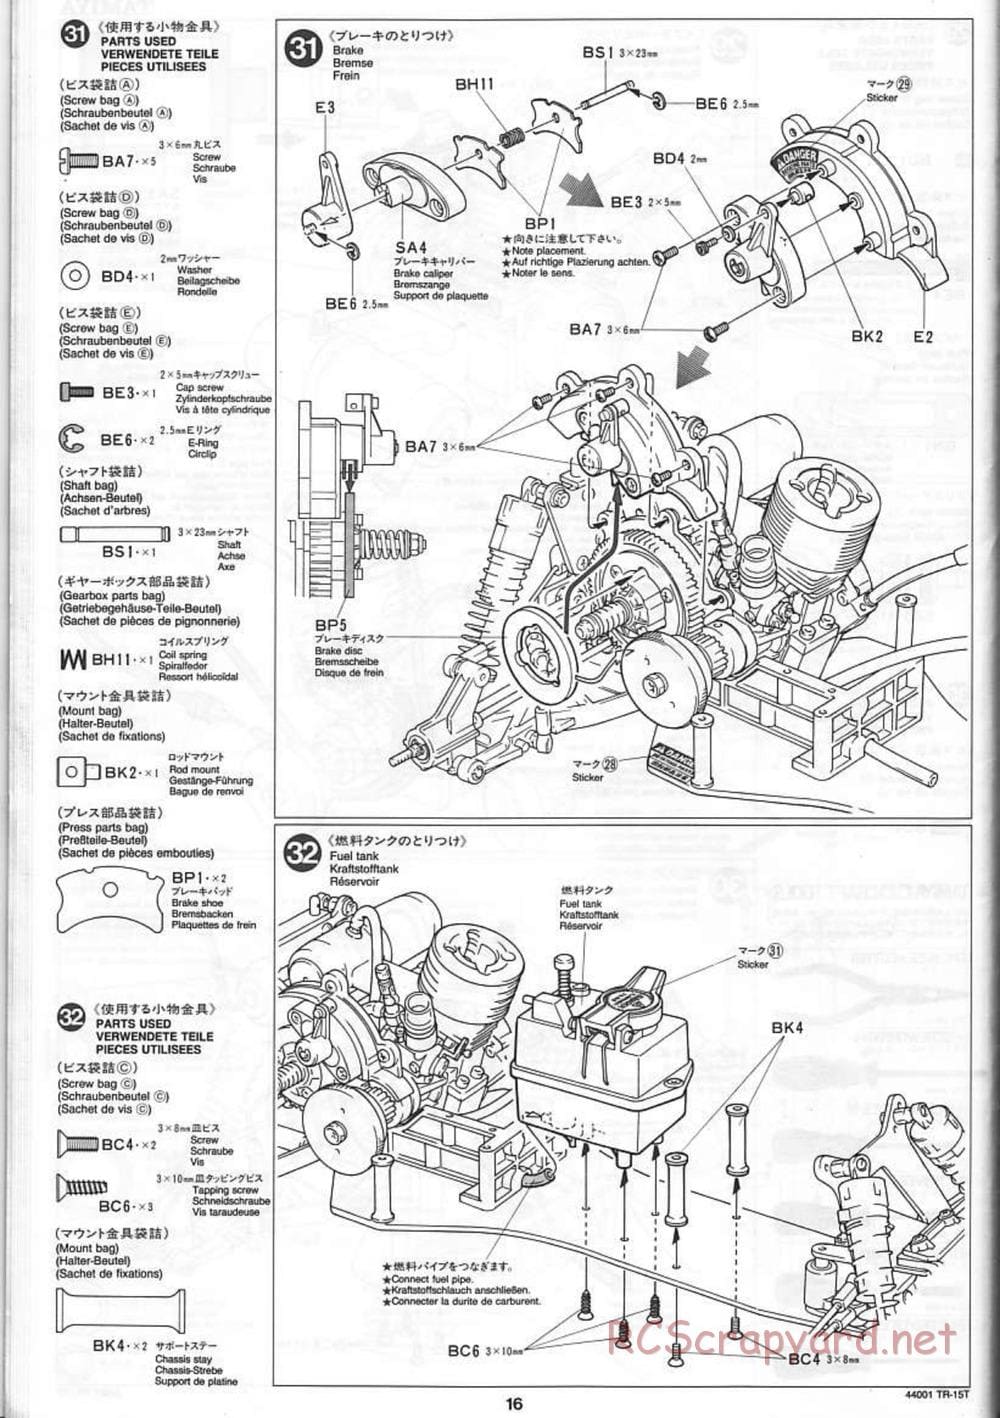 Tamiya - Stadium Racing Truck TR-15T Chassis - Manual - Page 16